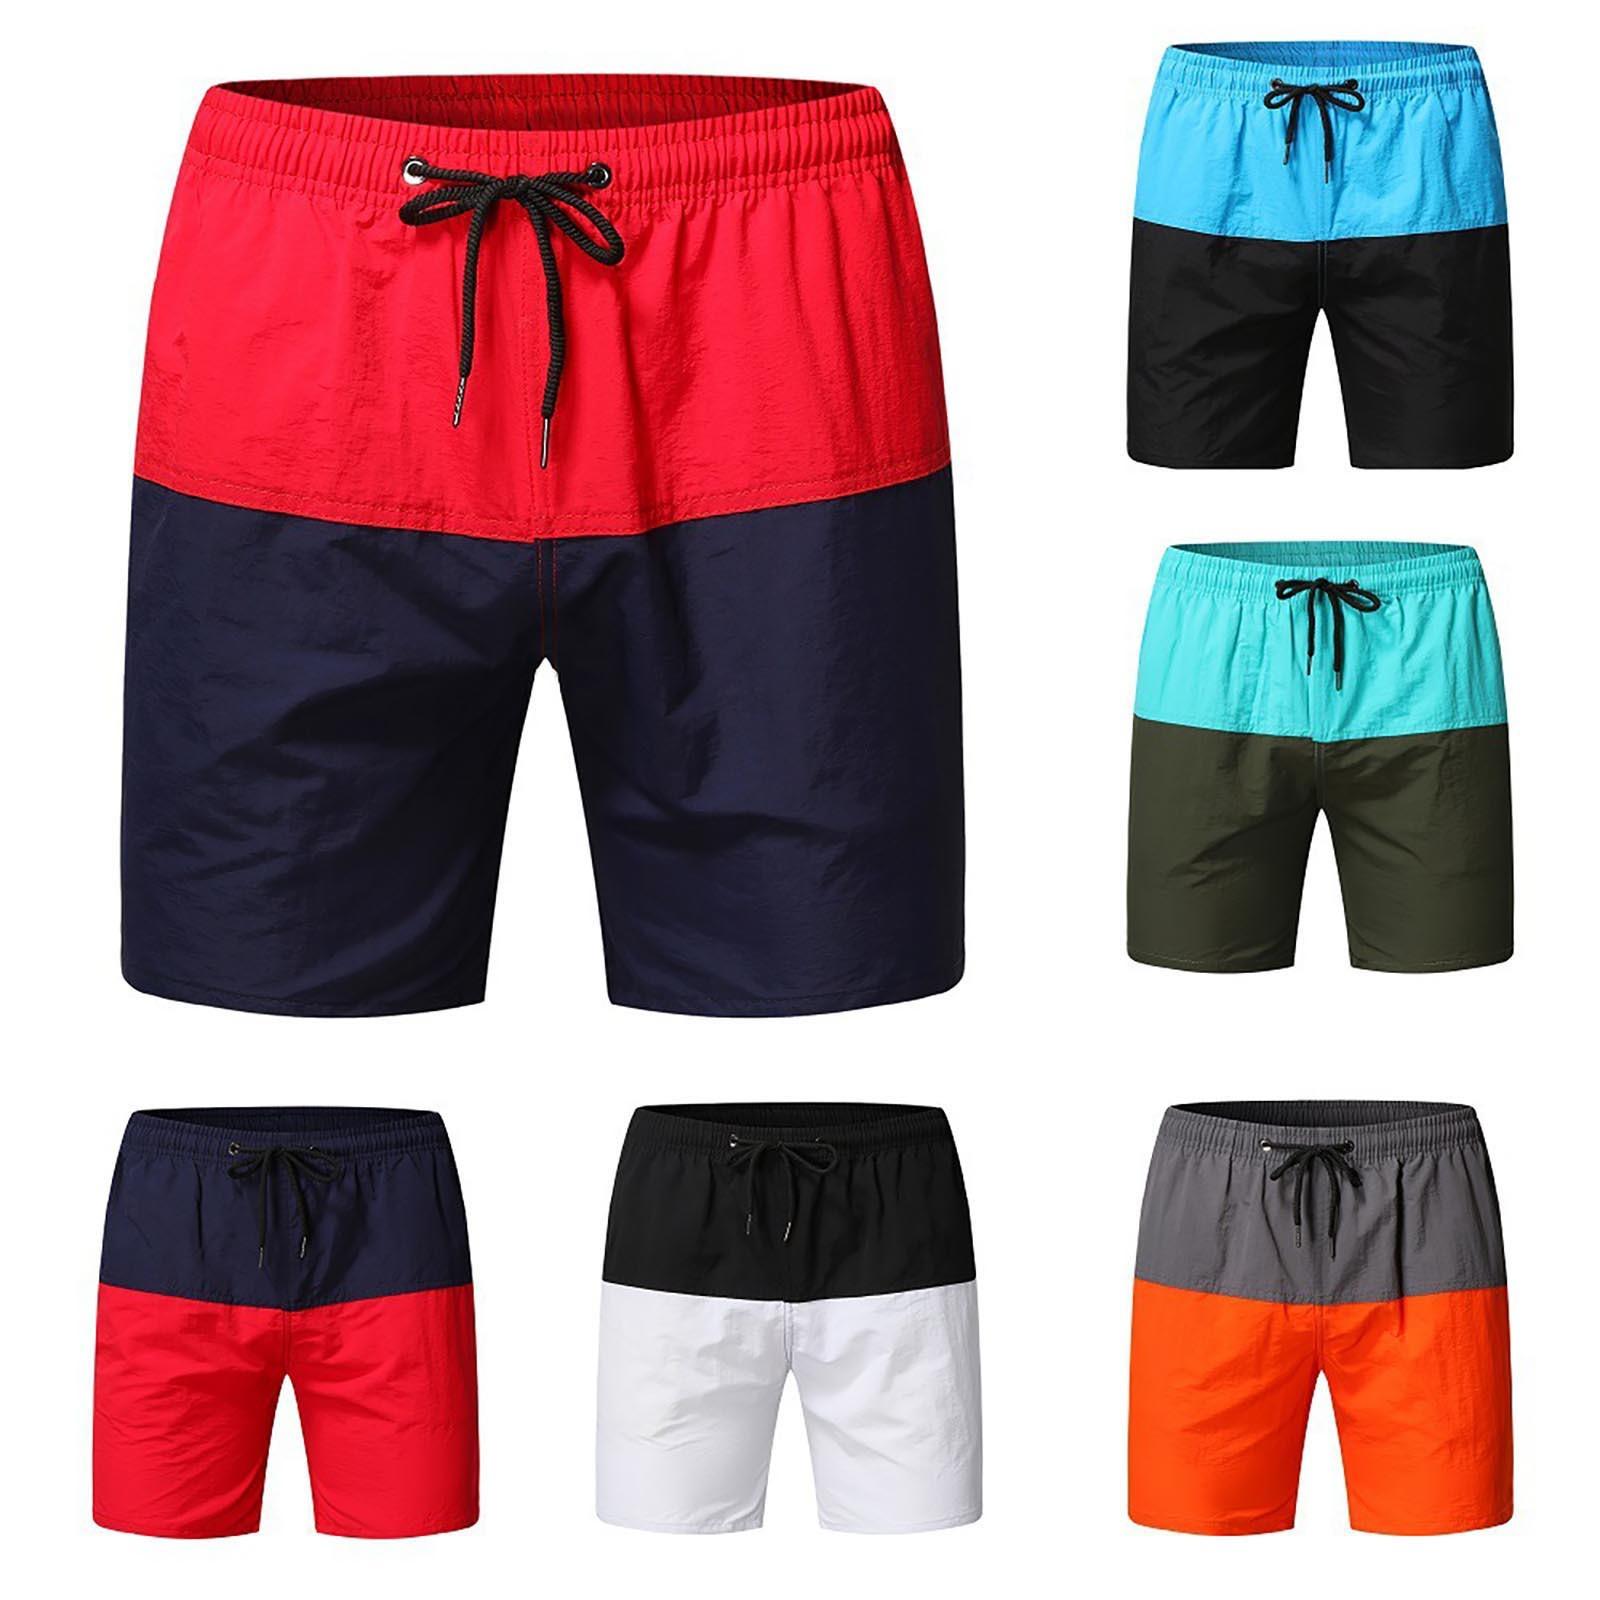 Viva La Vida Fashionable Men's Summer Outdoor Beach Sports Casual Color Matching Shorts